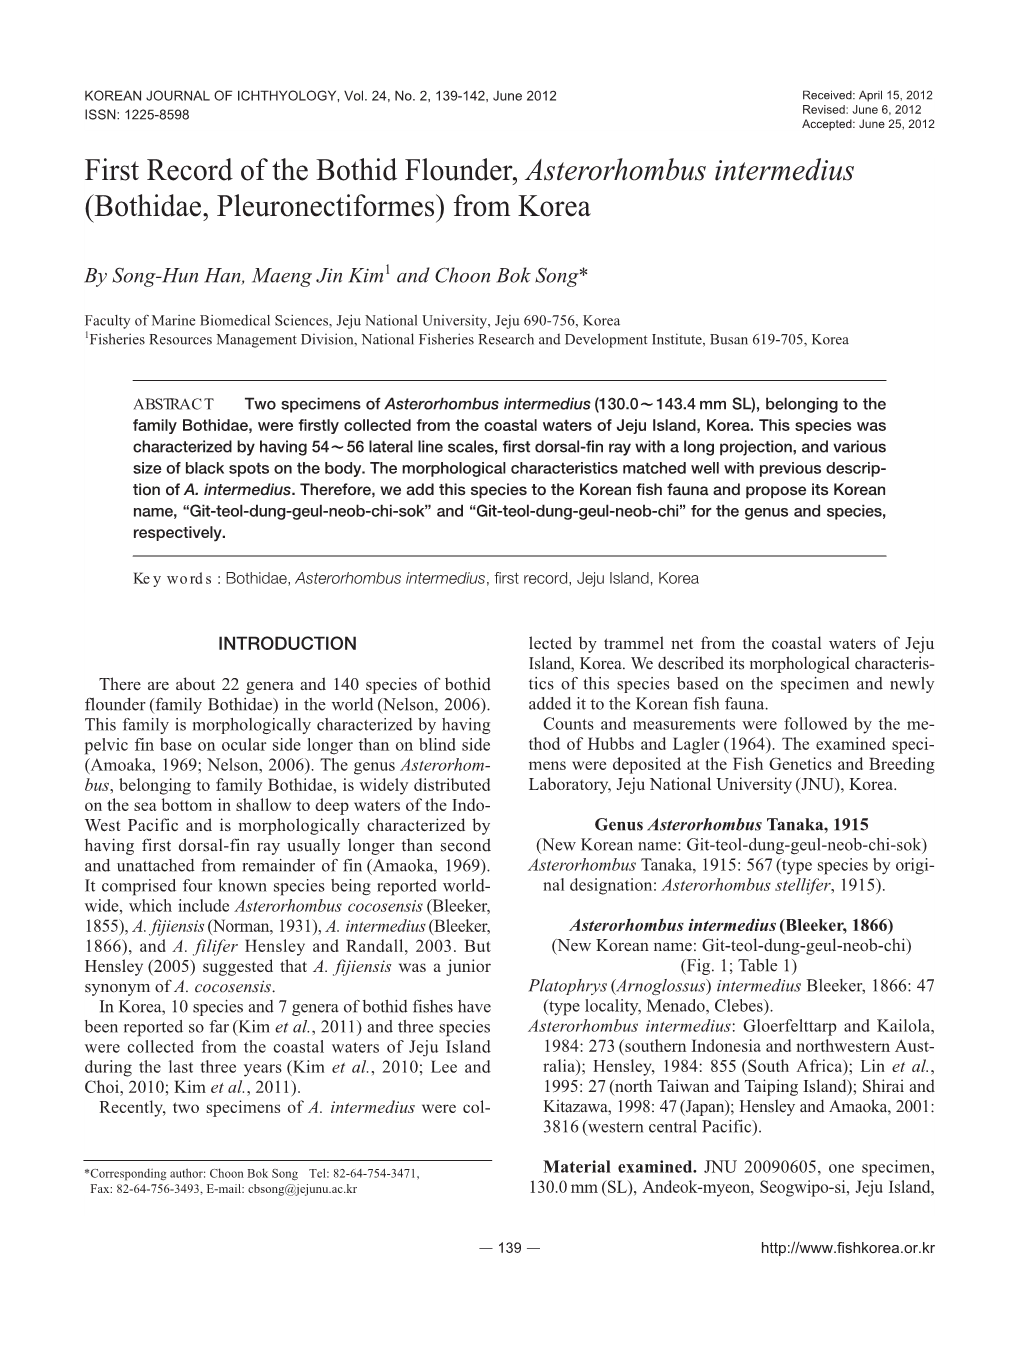 First Record of the Bothid Flounder, Asterorhombus Intermedius (Bothidae, Pleuronectiformes) from Korea